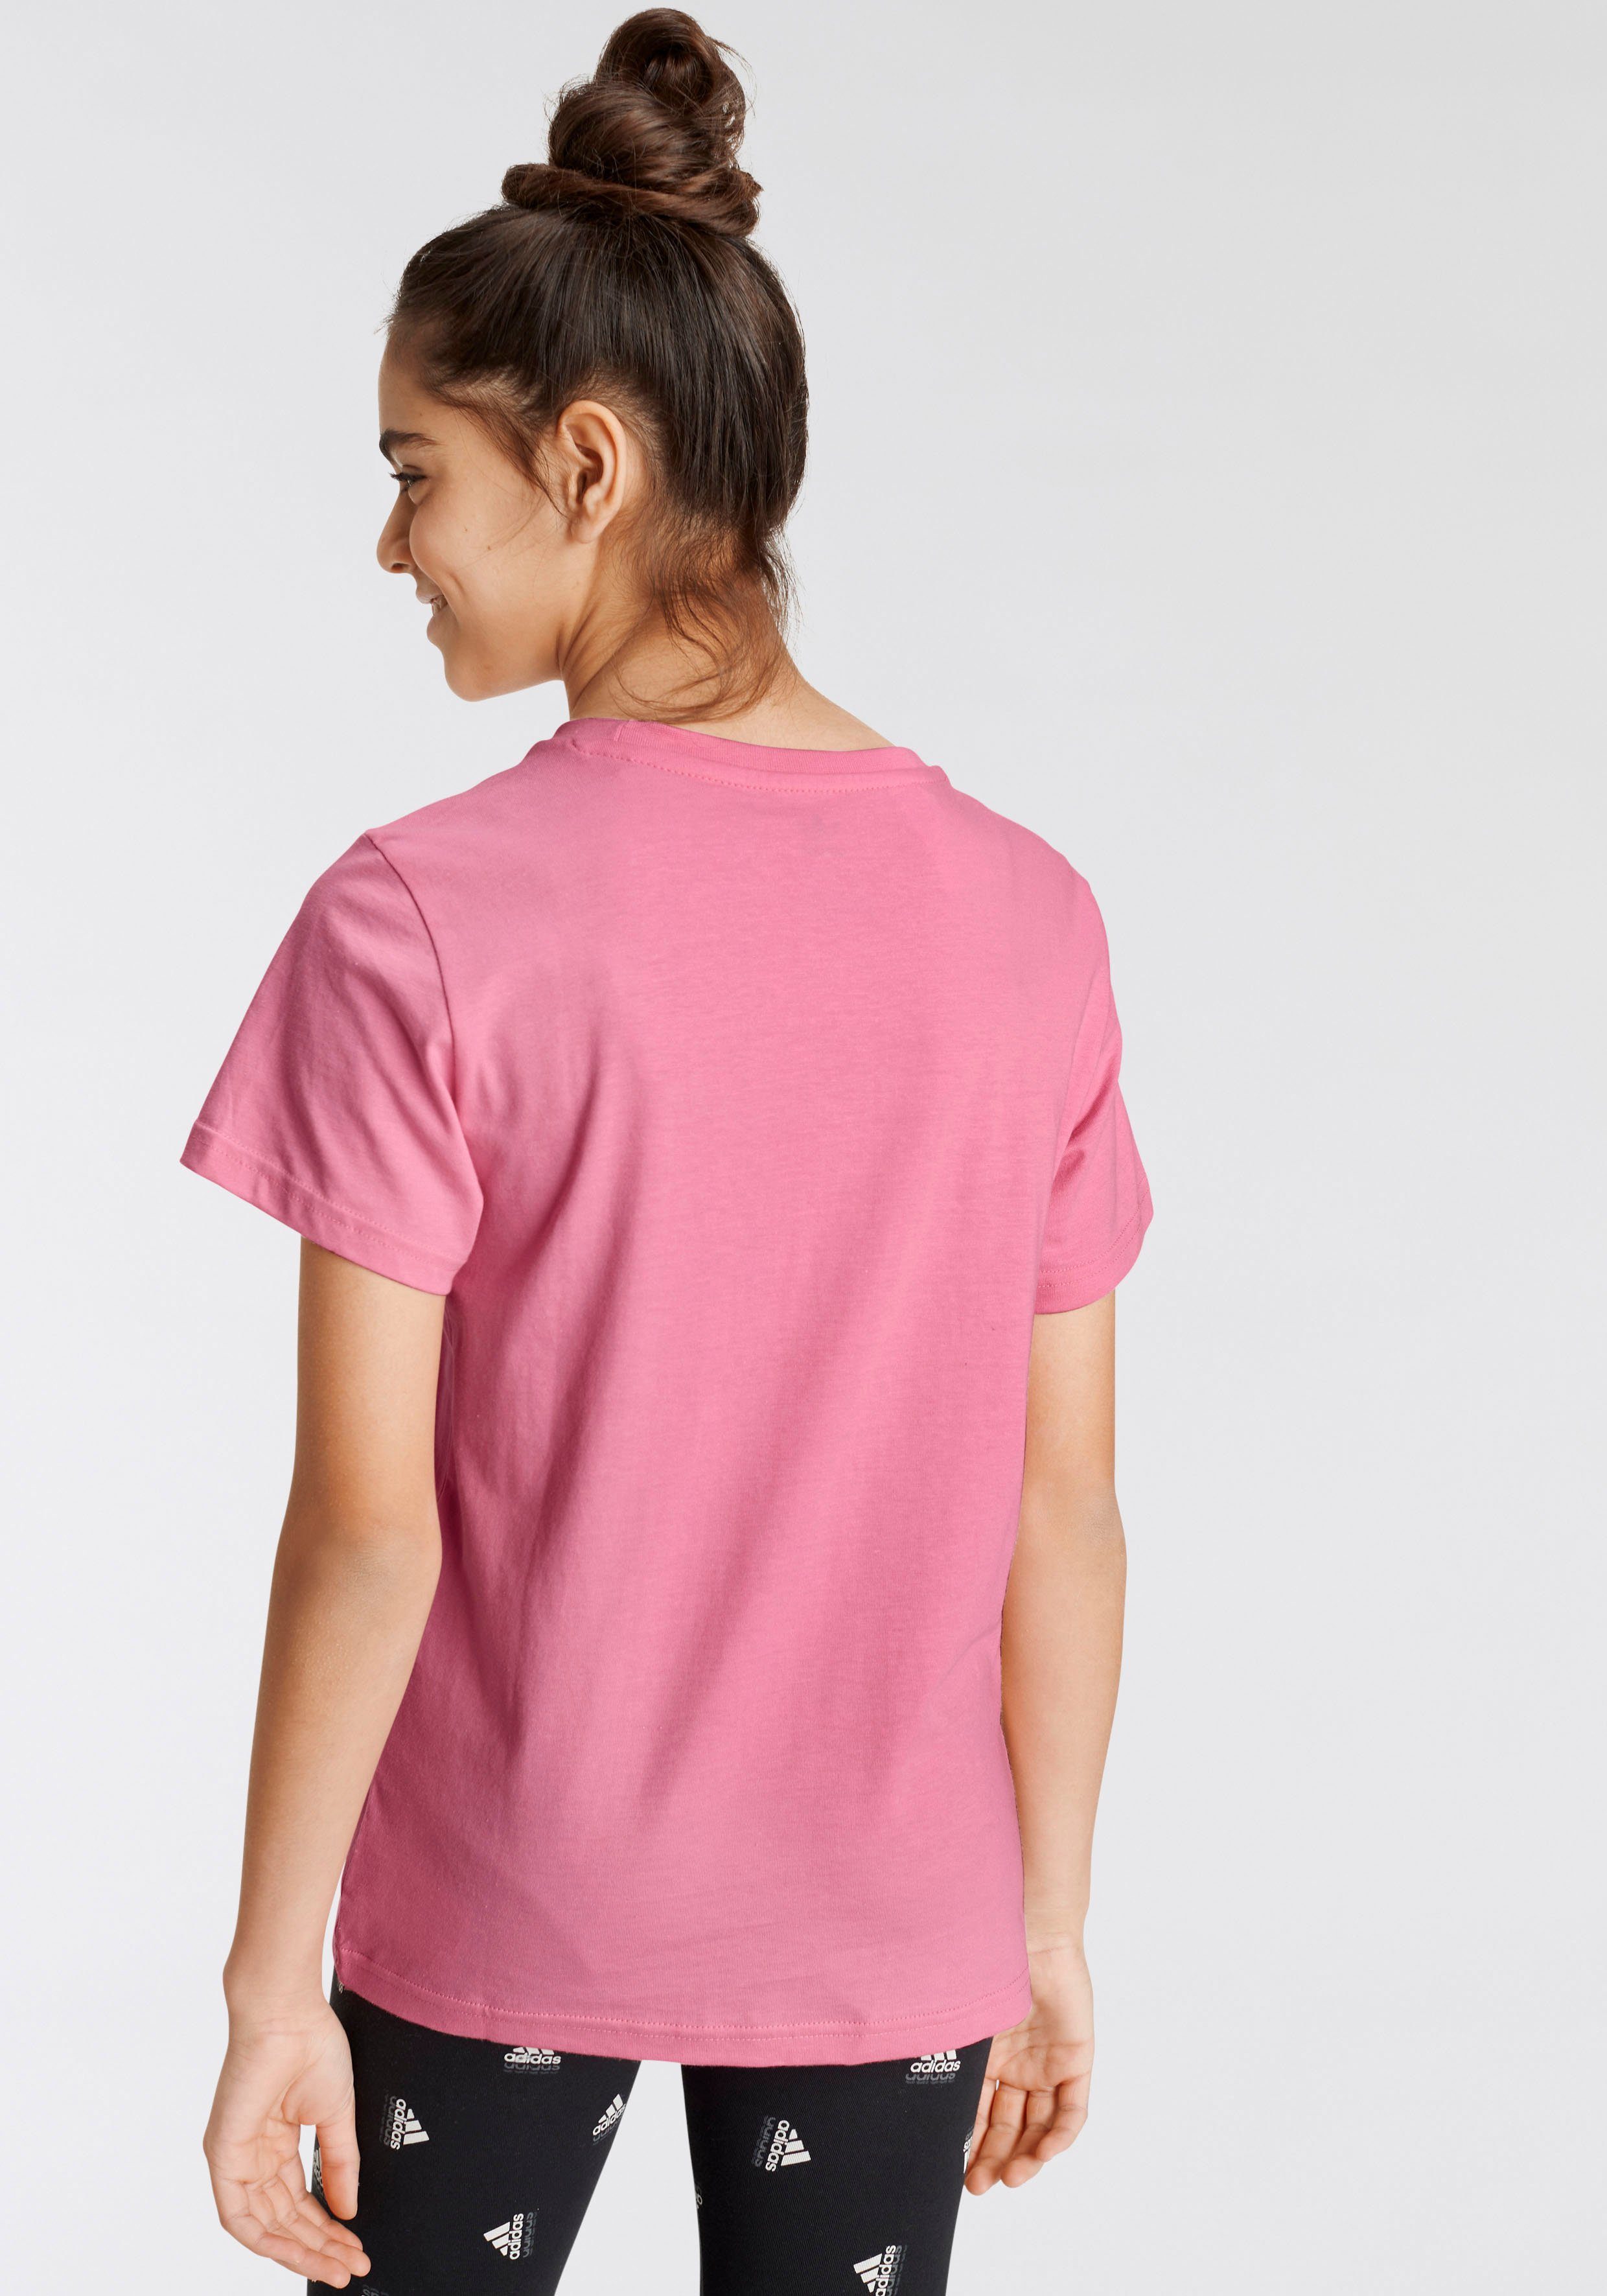 TEE adidas Bliss Pink TREFOIL T-Shirt Originals White / Unisex